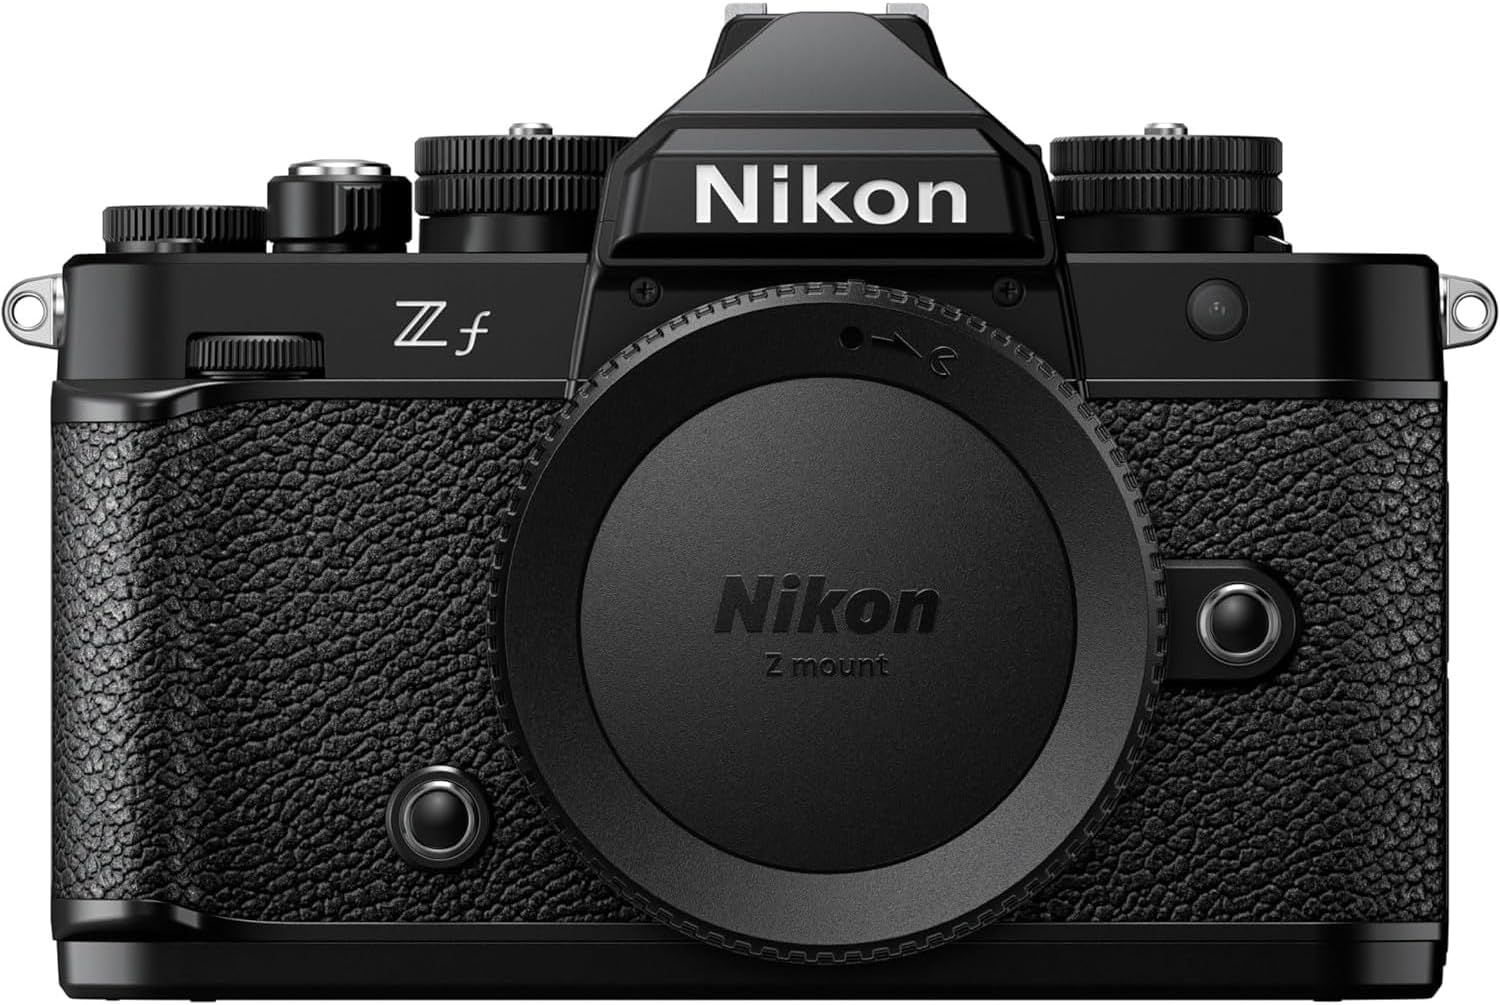 Nikon Zf camera